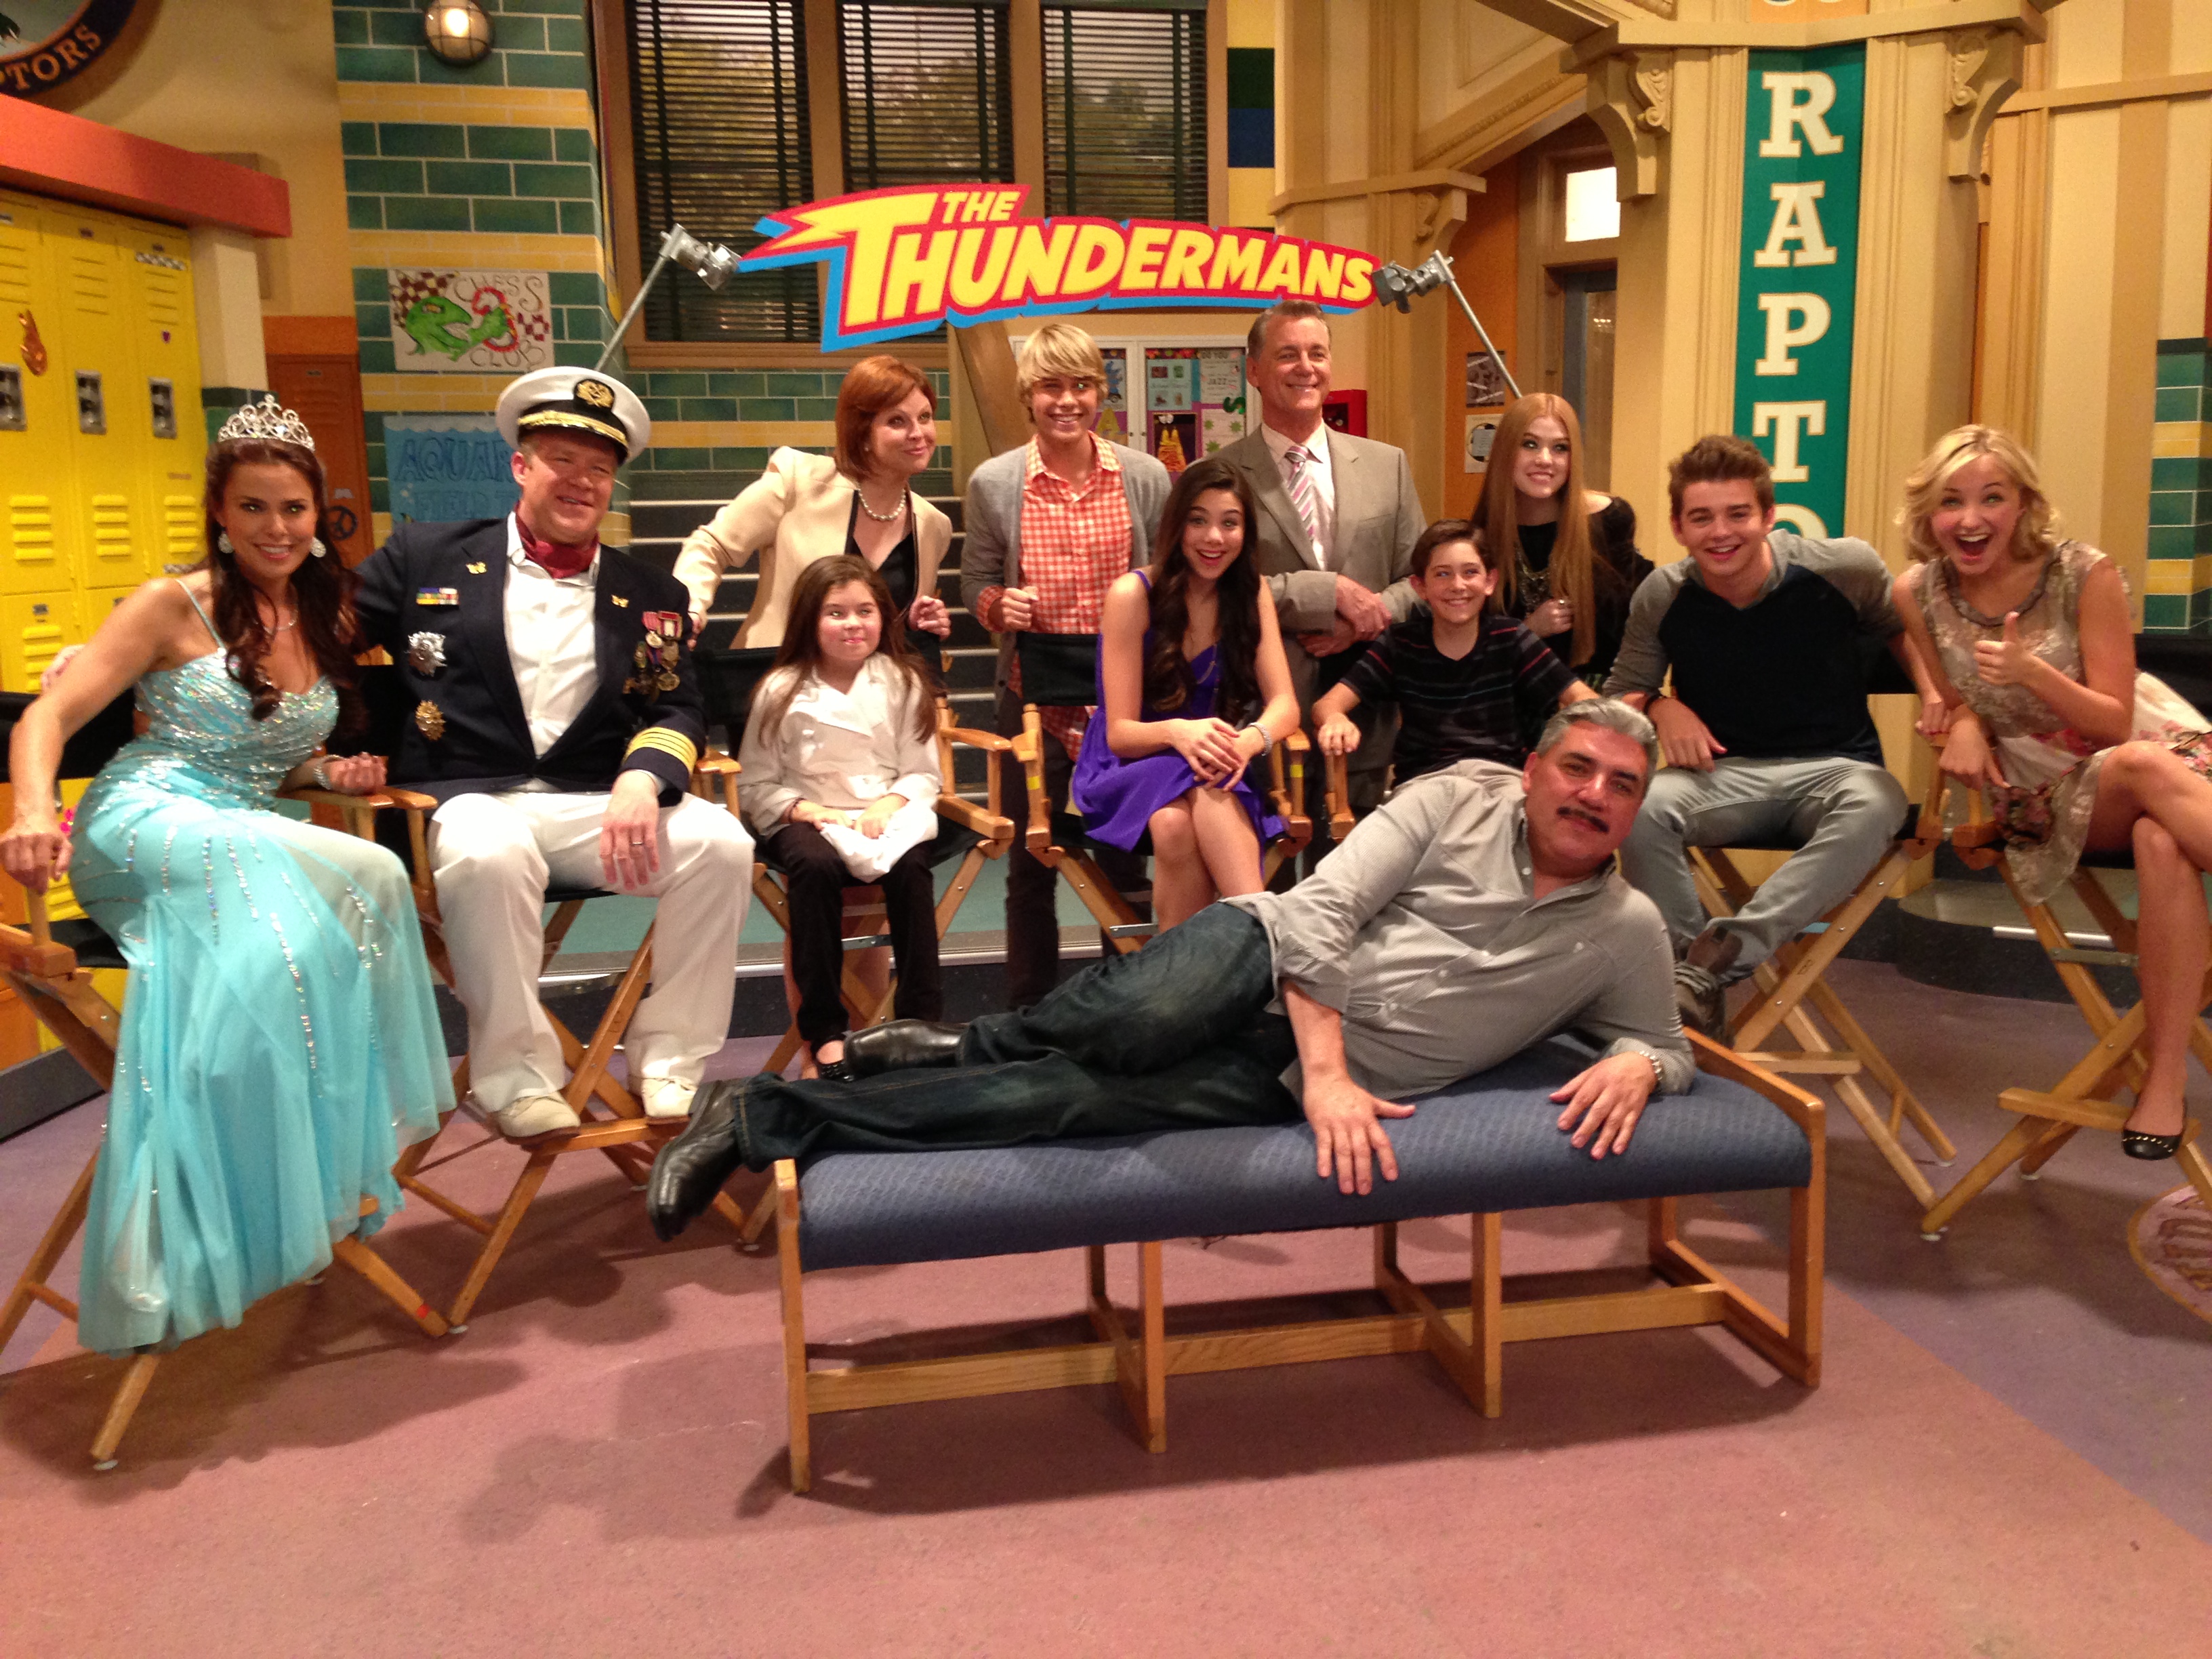 The Thundermans cast!